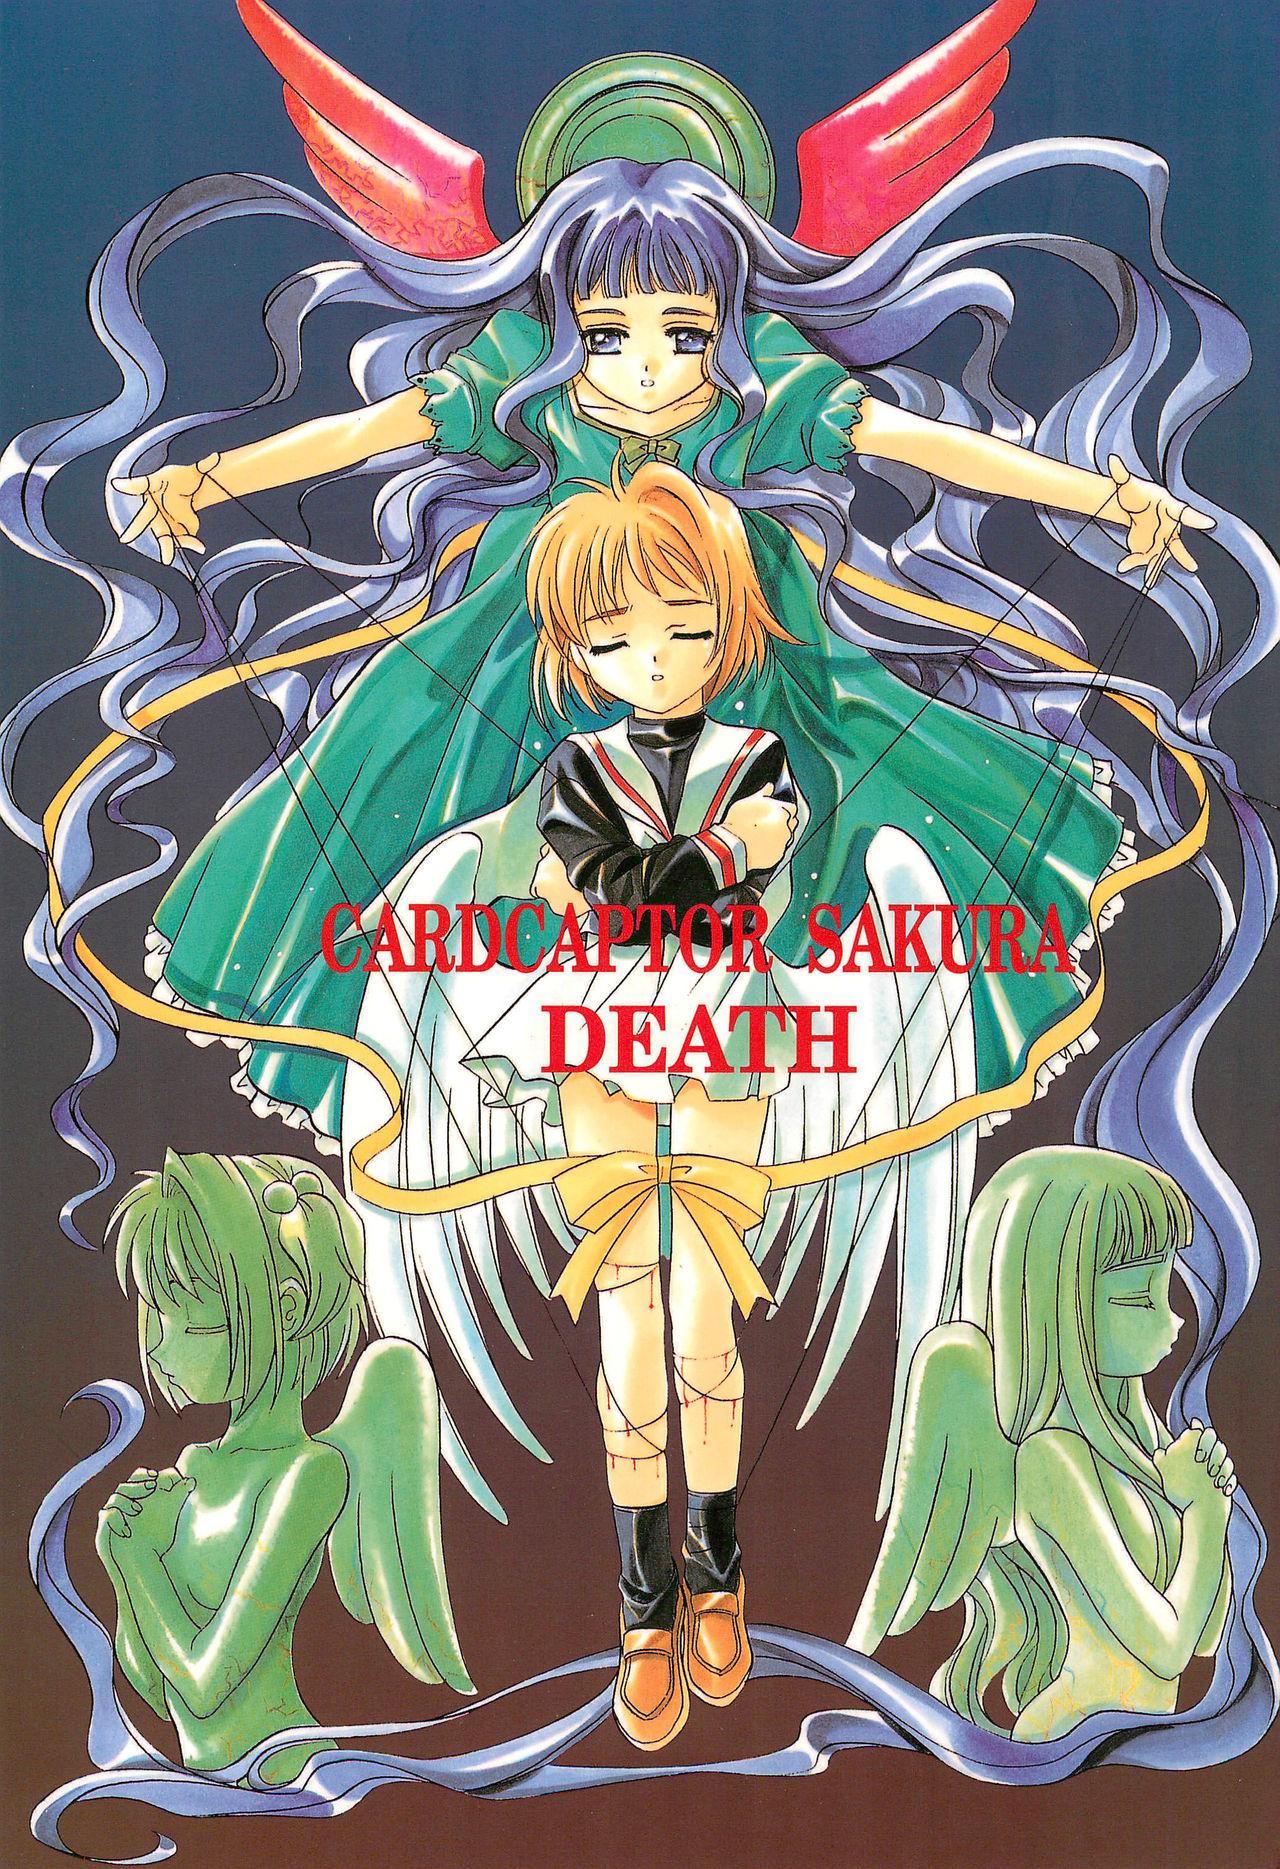 Hot Teen CARDCAPTOR SAKURA DEATH - Cardcaptor sakura Instagram - Picture 1